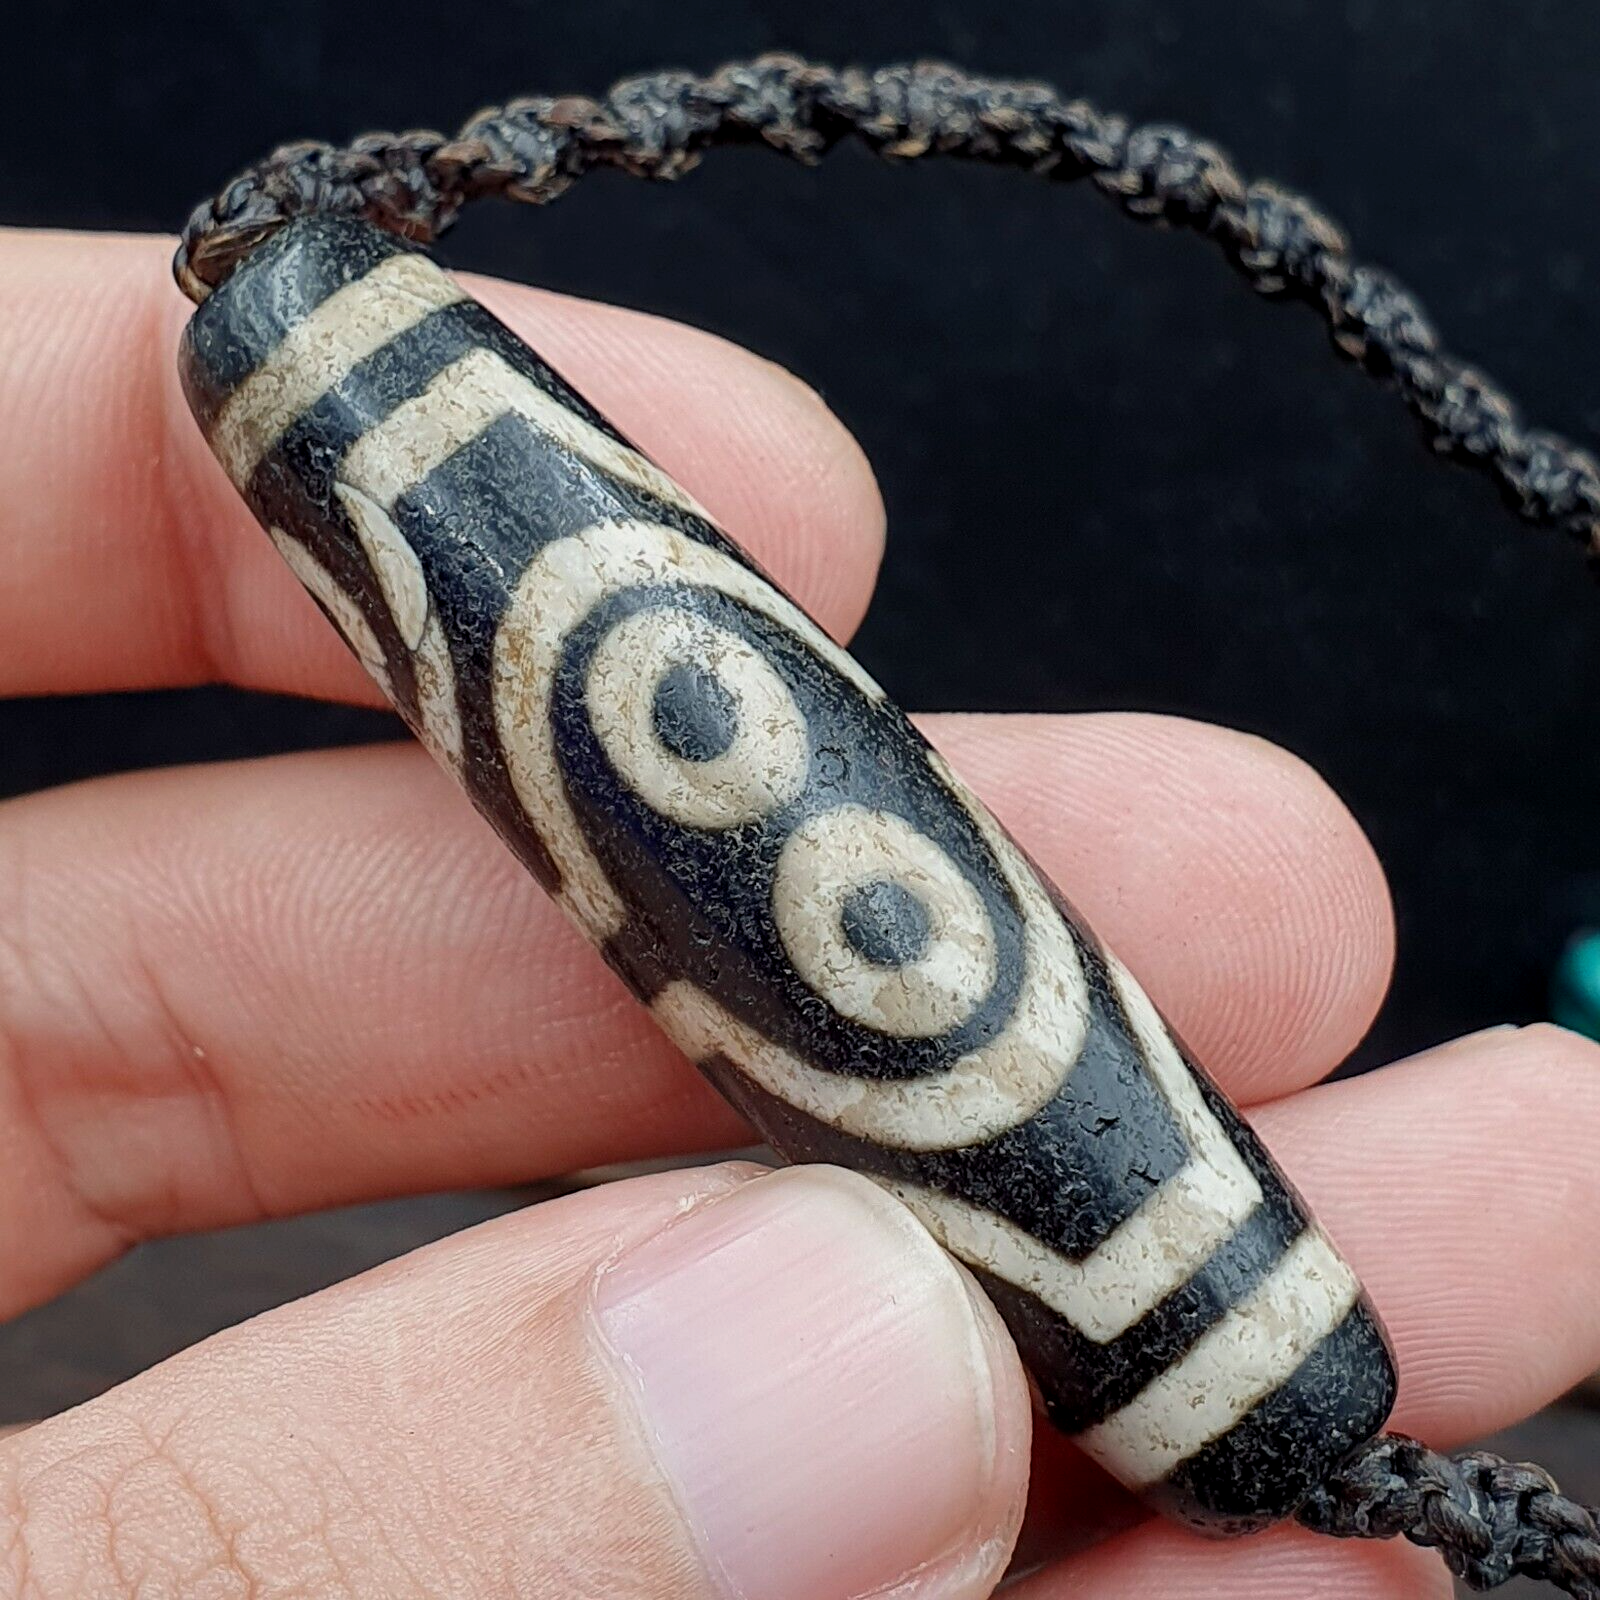 8 Eyes BEAD Tibetan dzi bead old amulet Black Agate Wax Thread Necklace